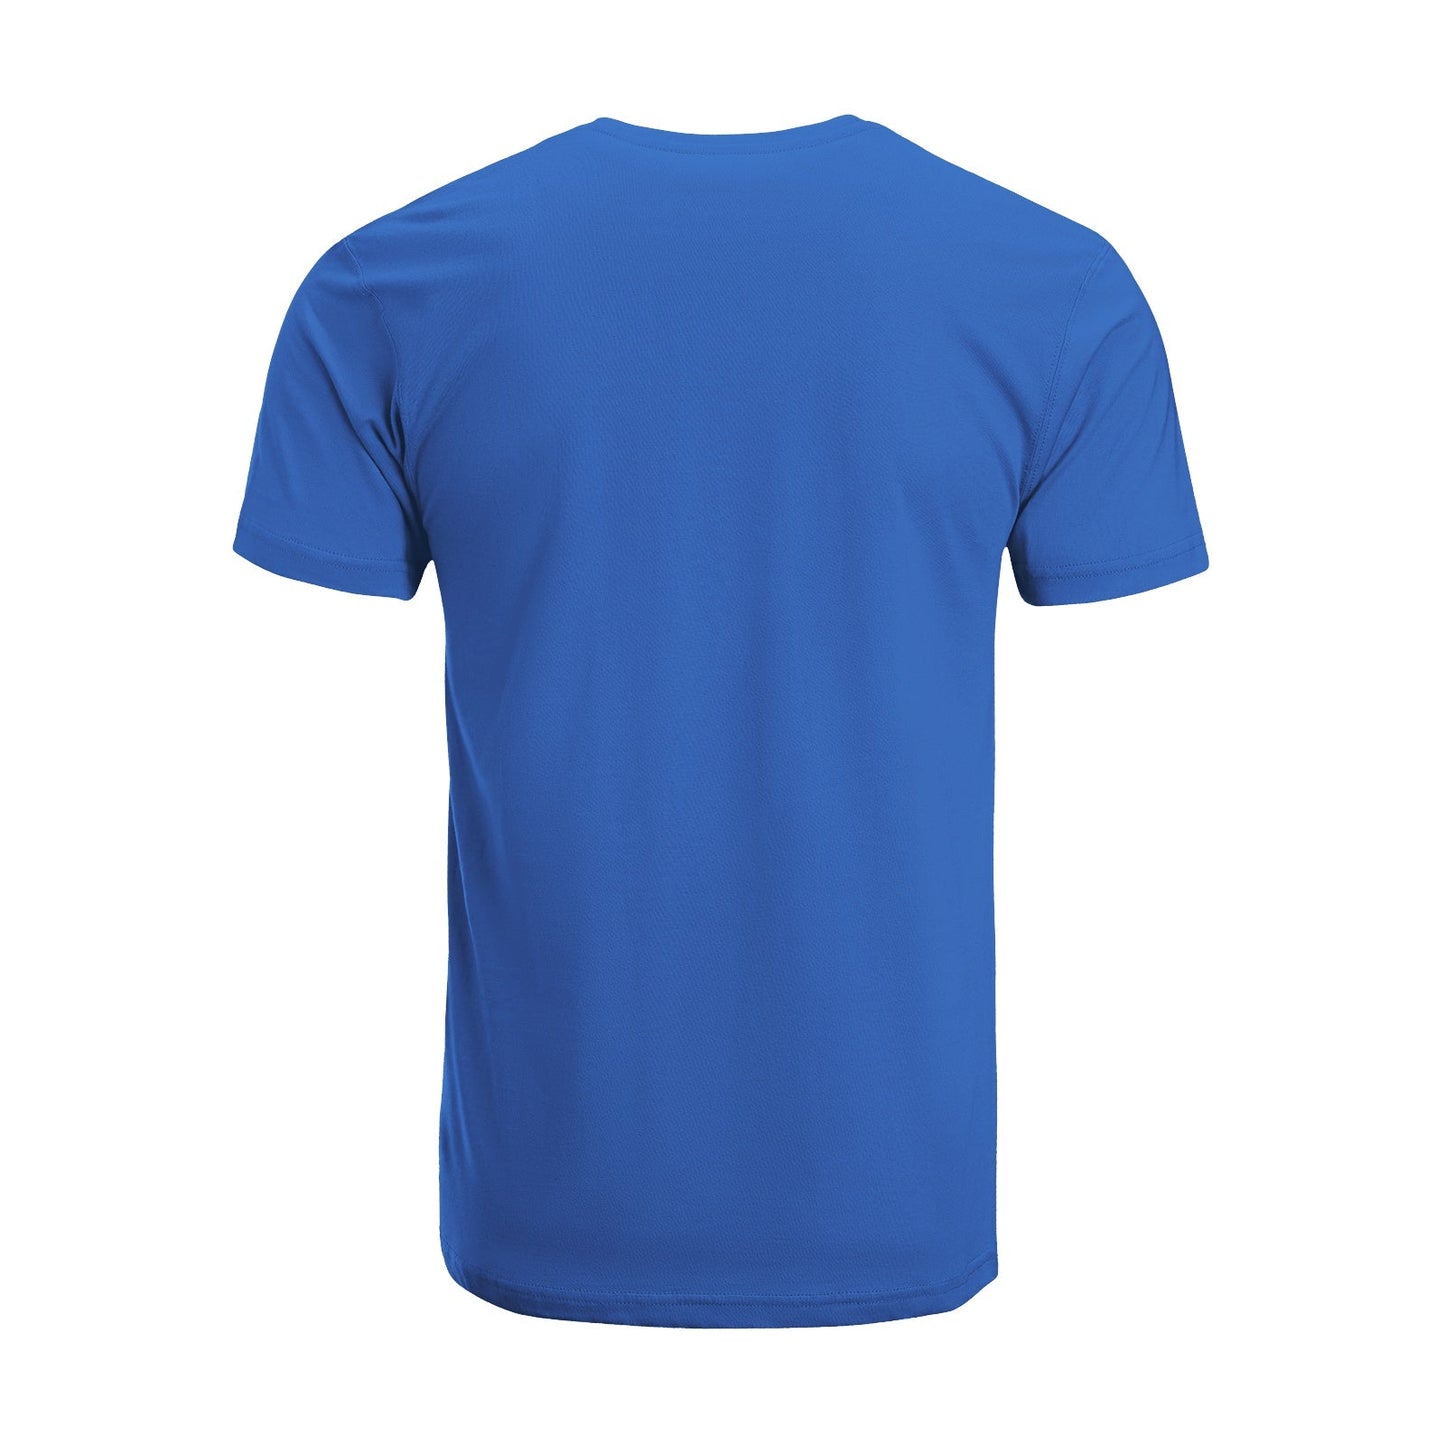 Unisex Short Sleeve Crew Neck Cotton Jersey T-Shirt USA 21